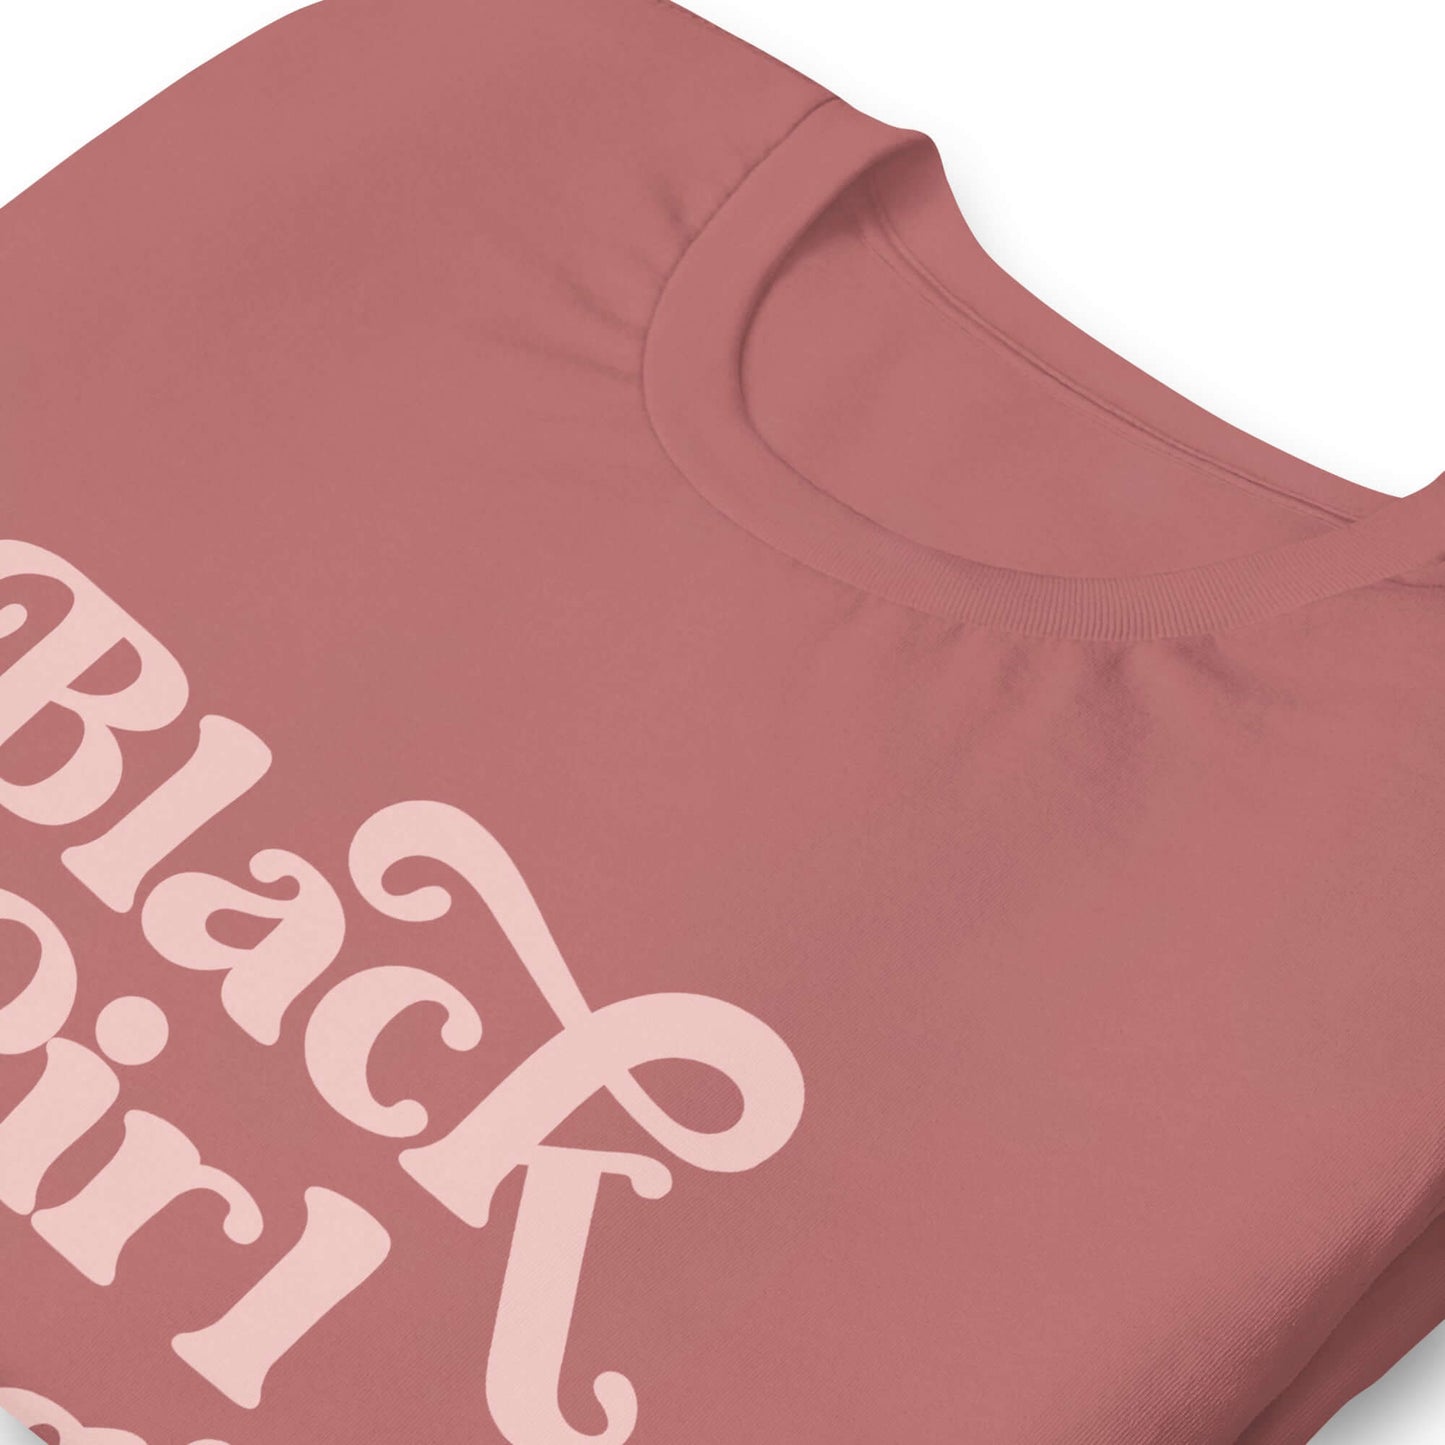 Black Girl Magic T-shirt - Bad Perfectionist Co.